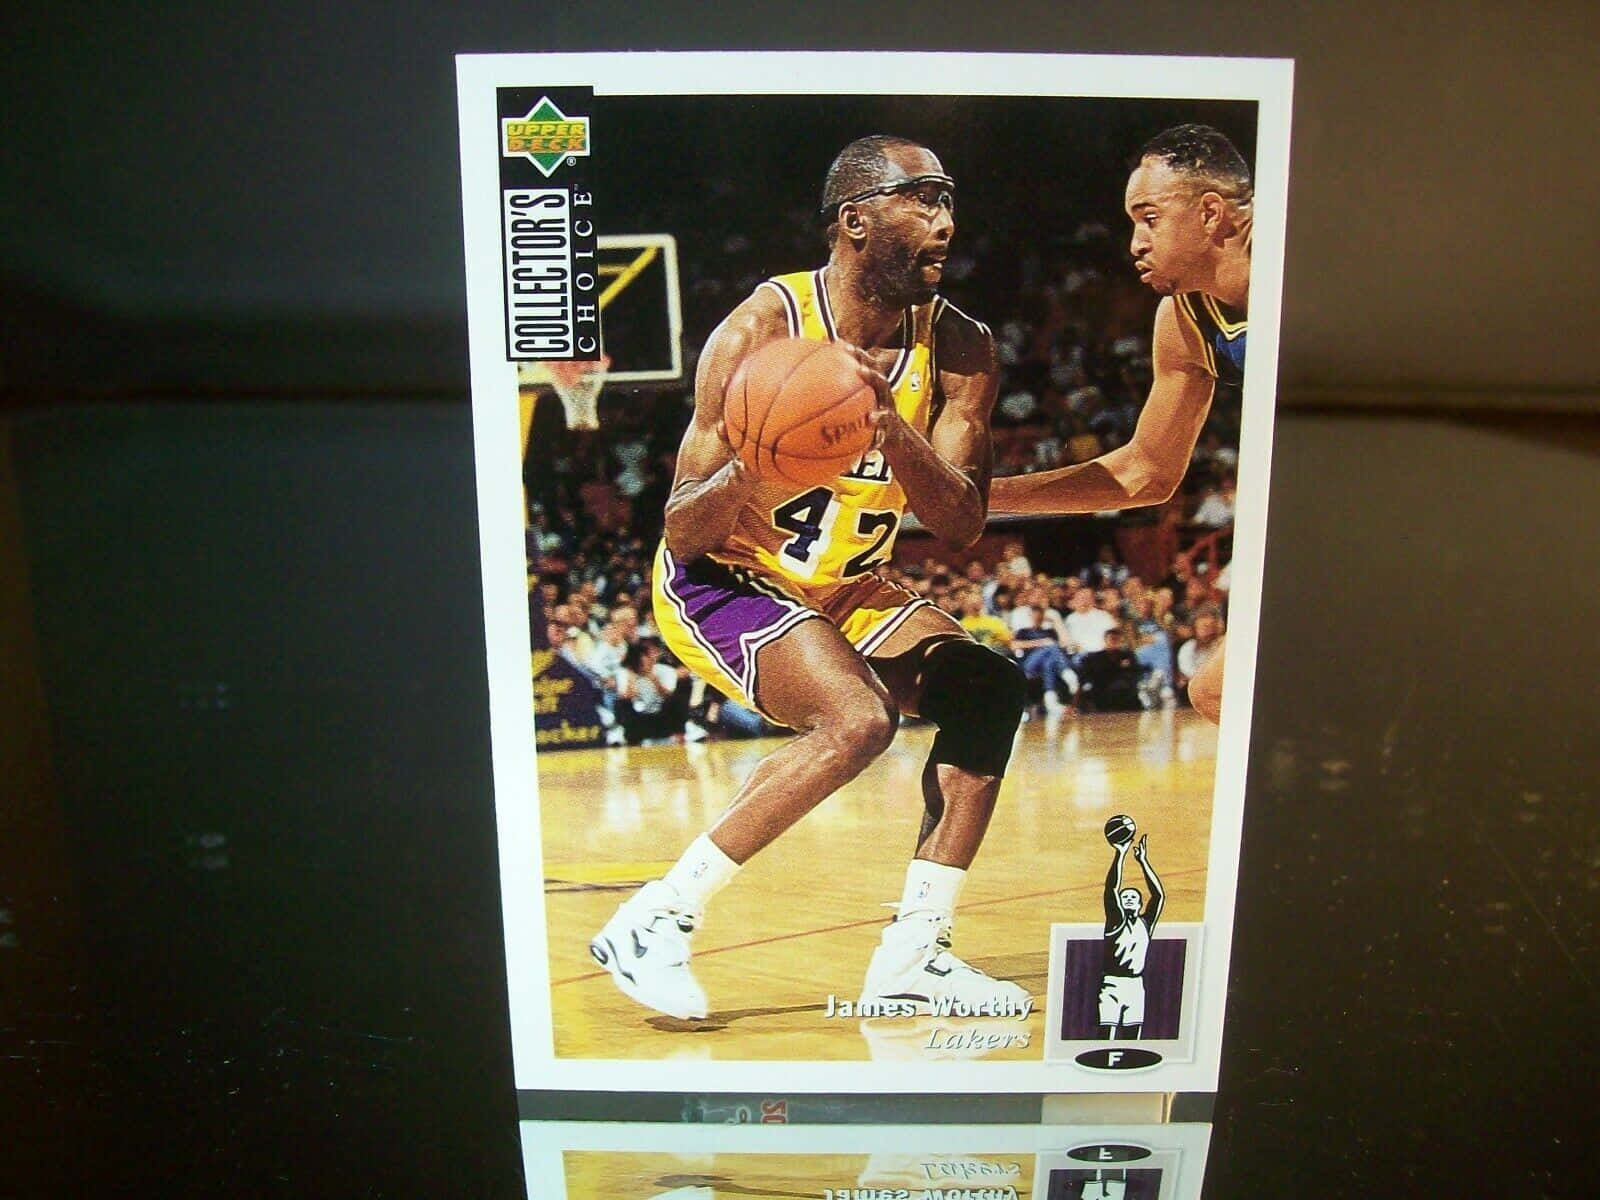 Jamesworthy 1994 Nba Lakers Fotokort. Wallpaper